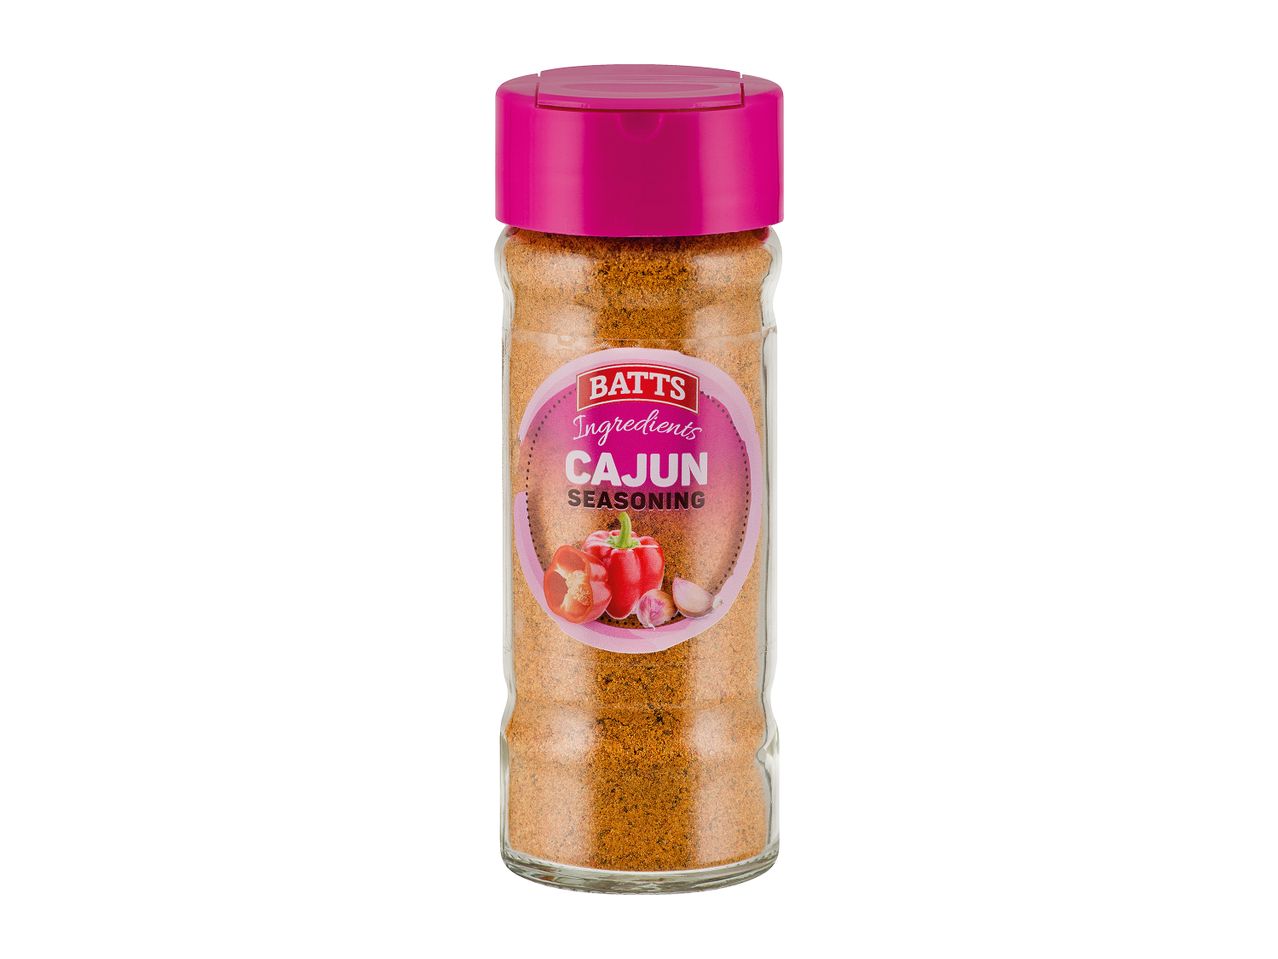 Go to full screen view: Batts Cajun Seasoning - Image 1